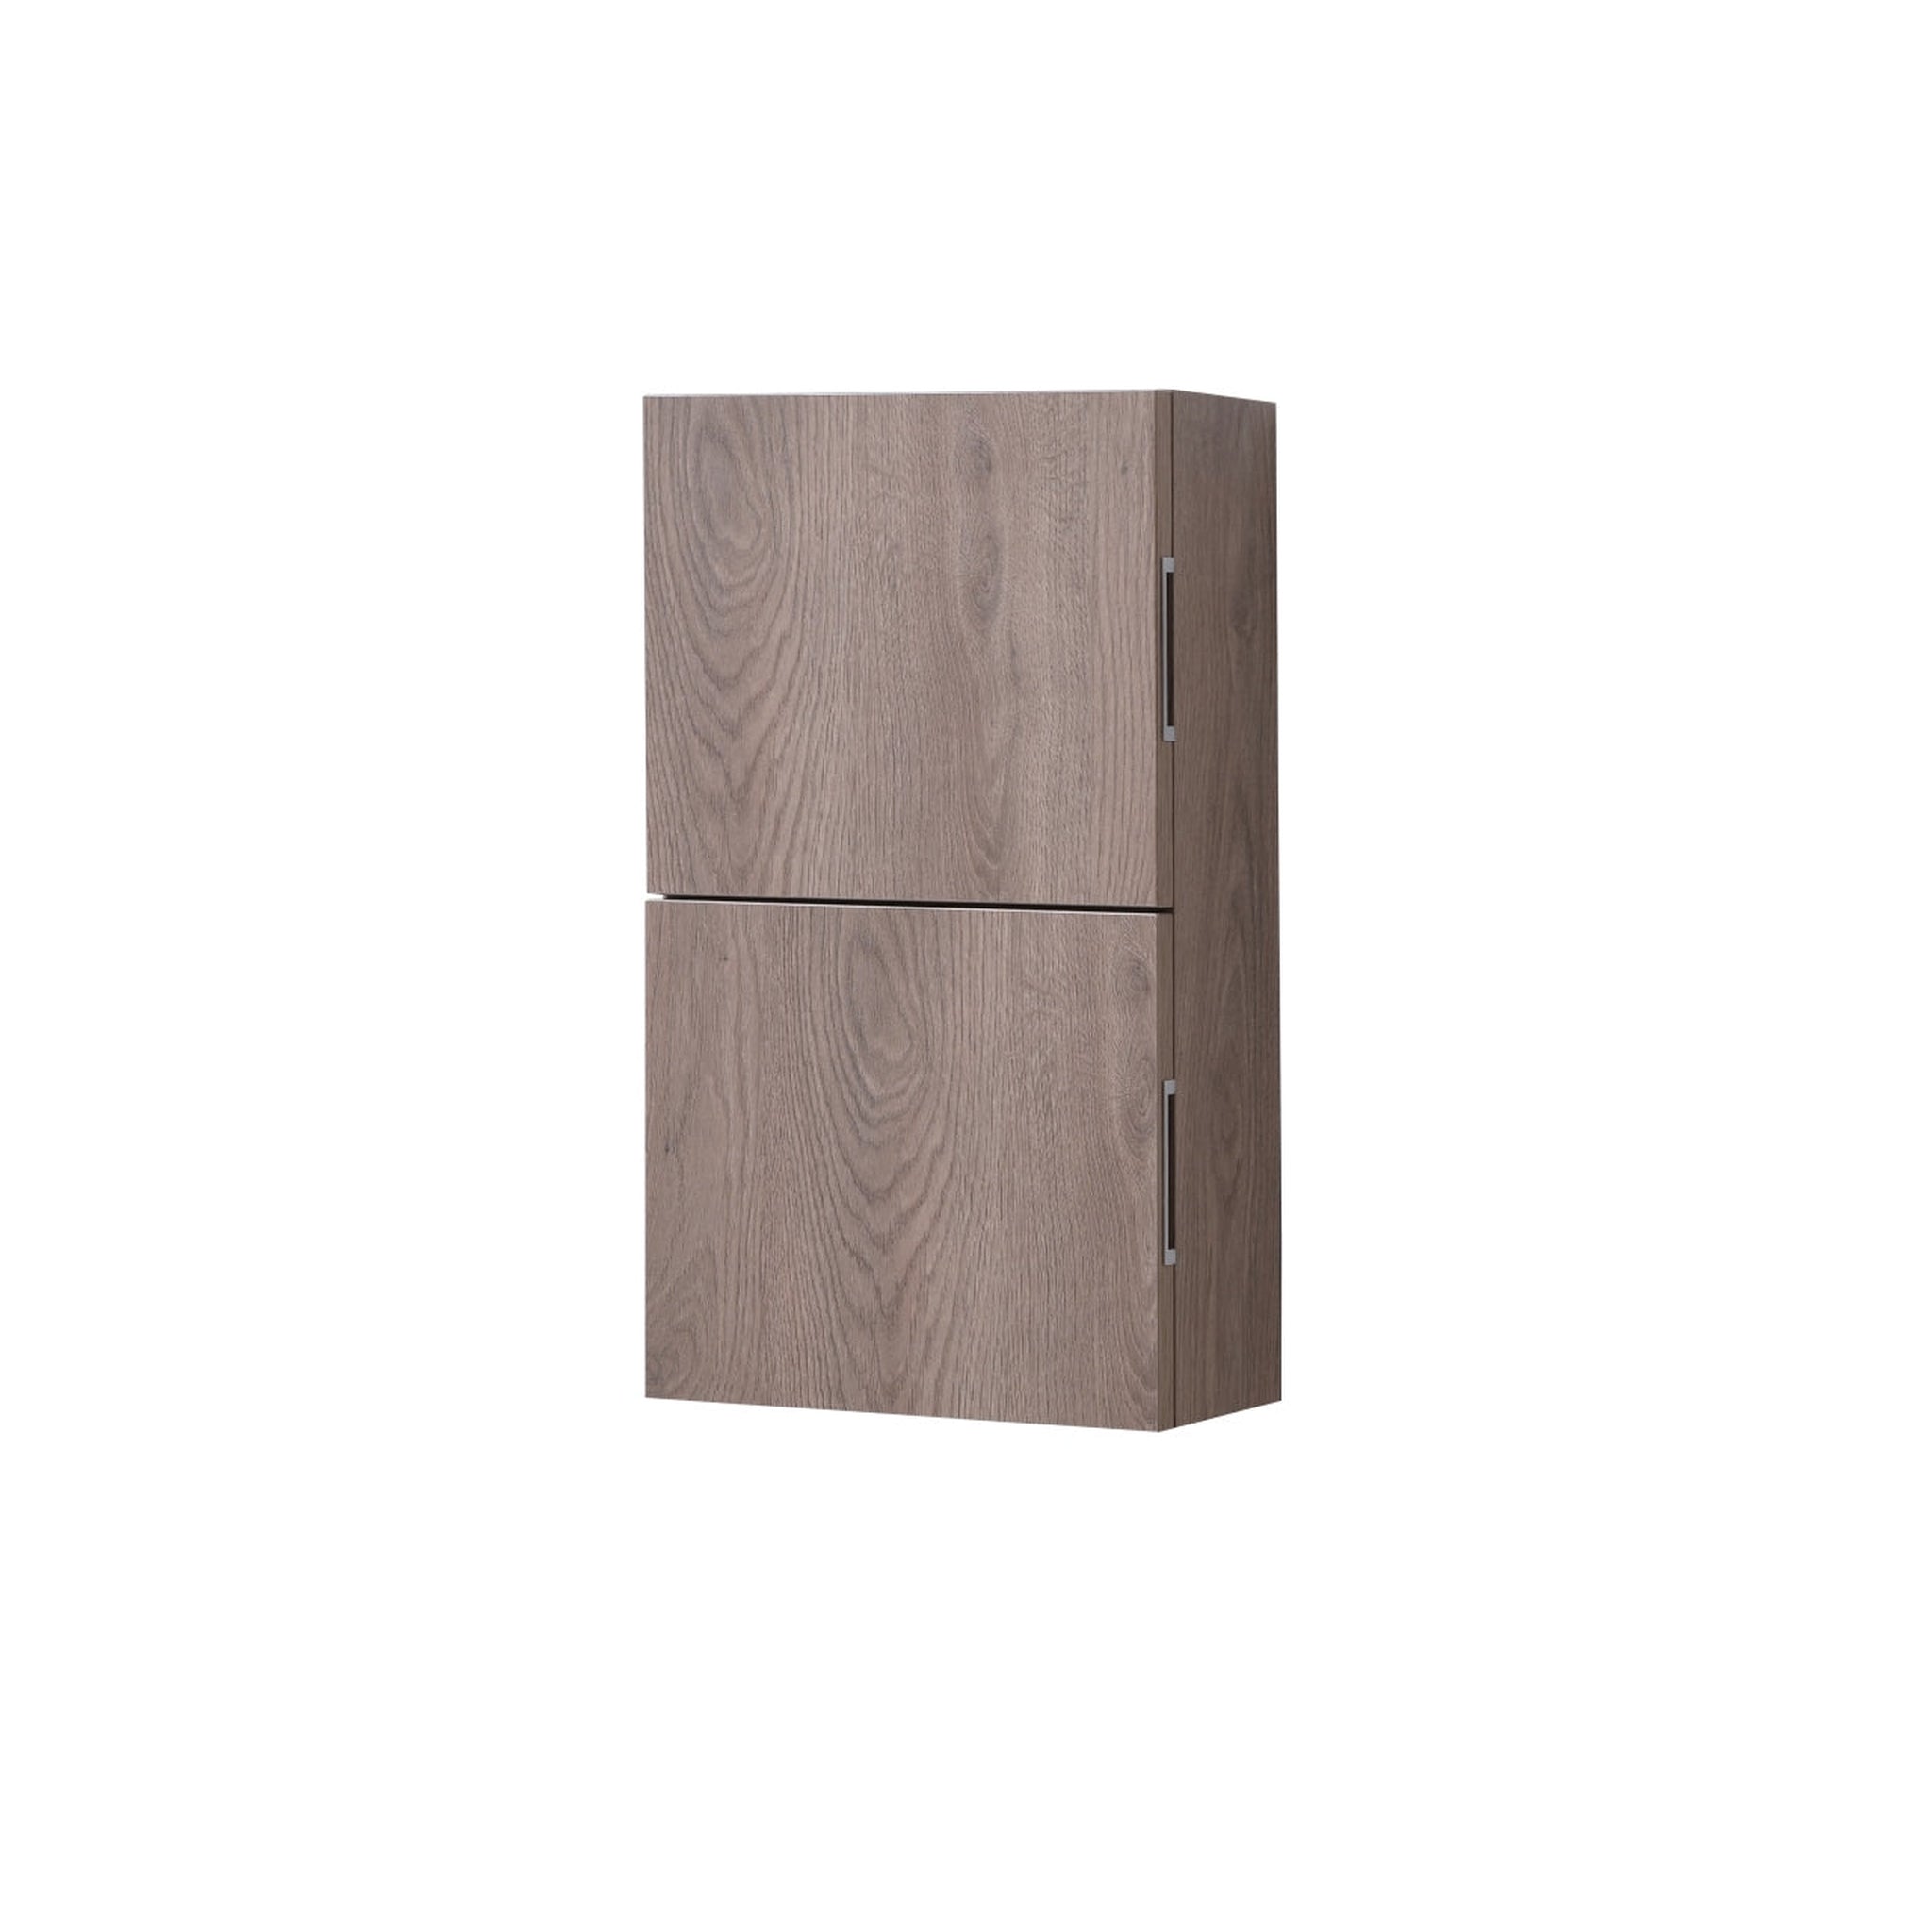 KubeBath, KubeBath Bliss 14"x 24" Butternut Wood Veneer Linen Side Cabinet With Two Storage Areas